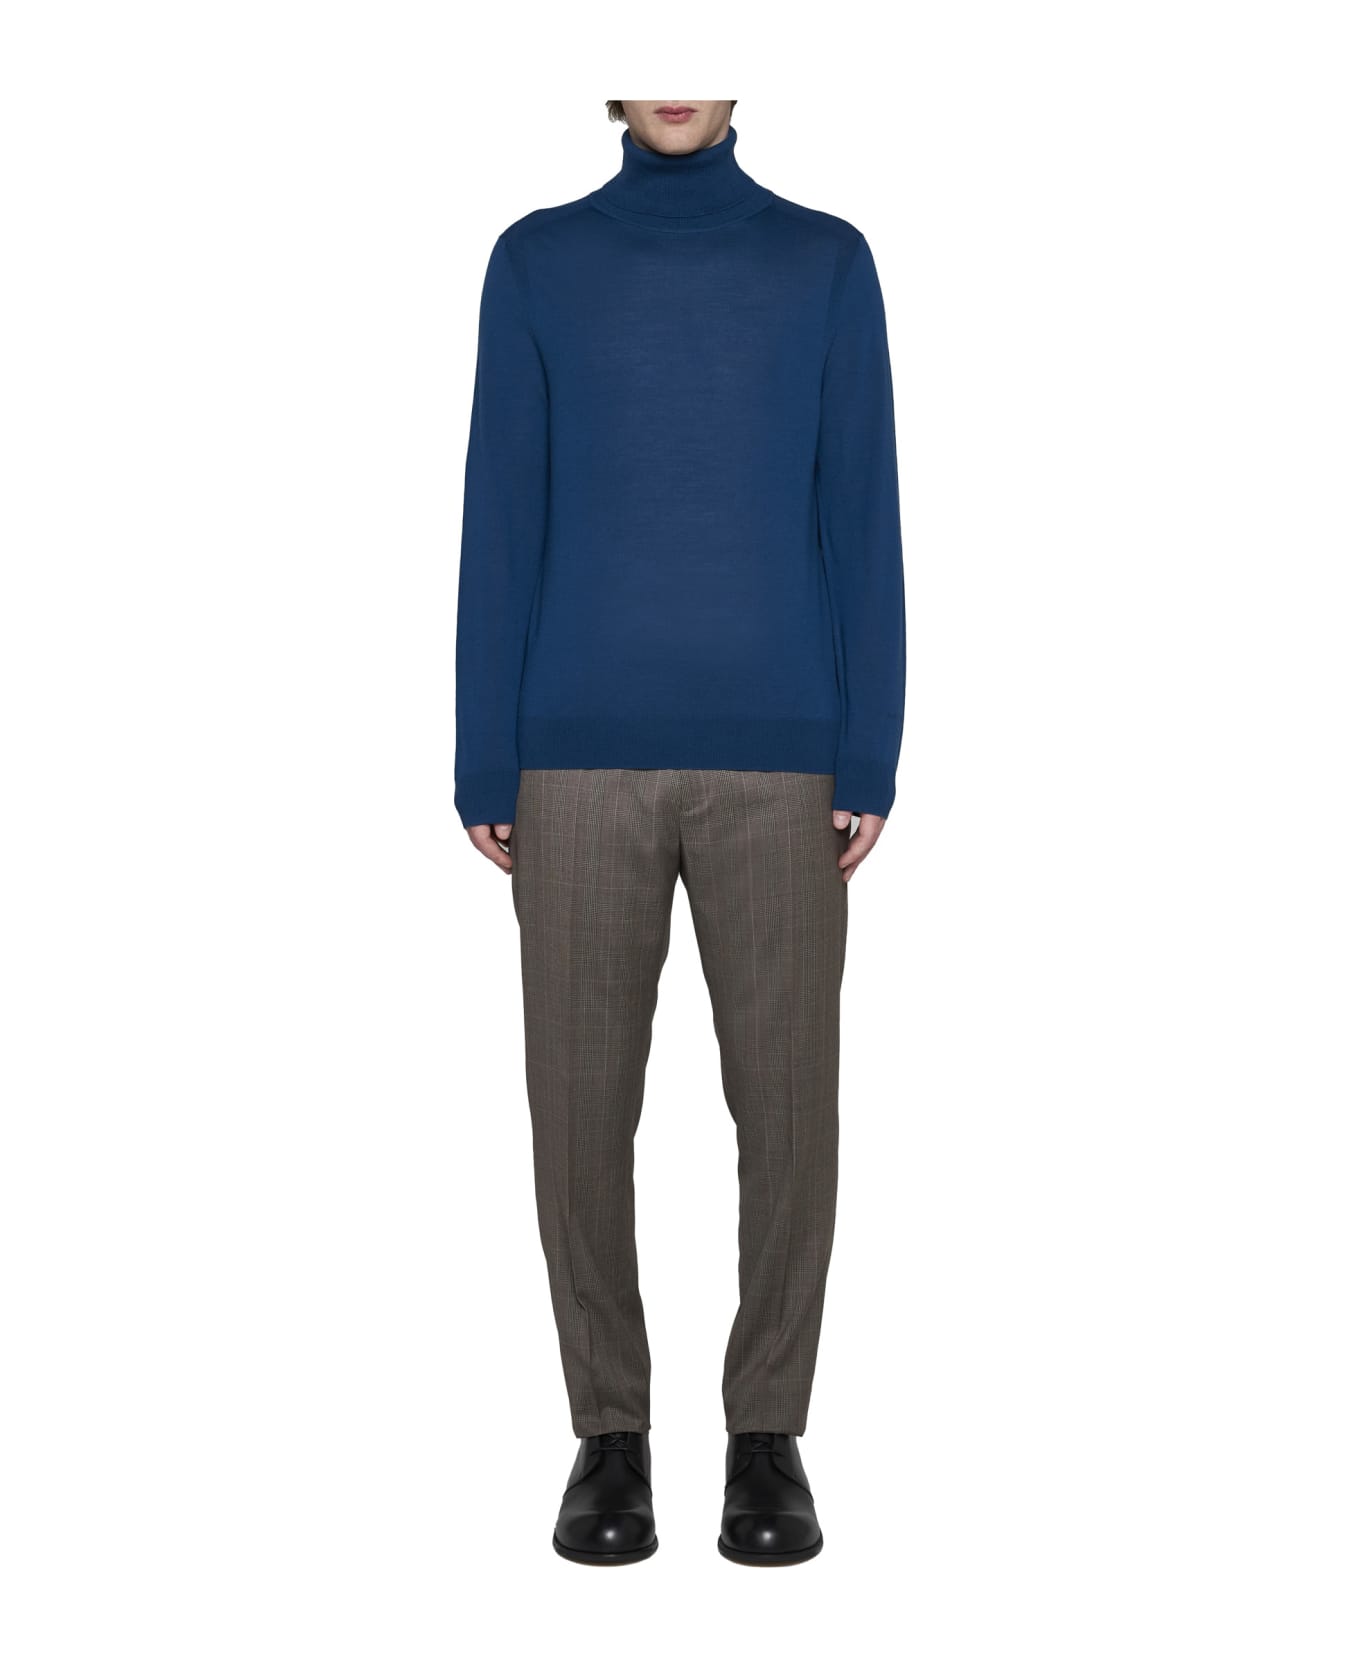 Paul Smith Sweater - Petrol blue